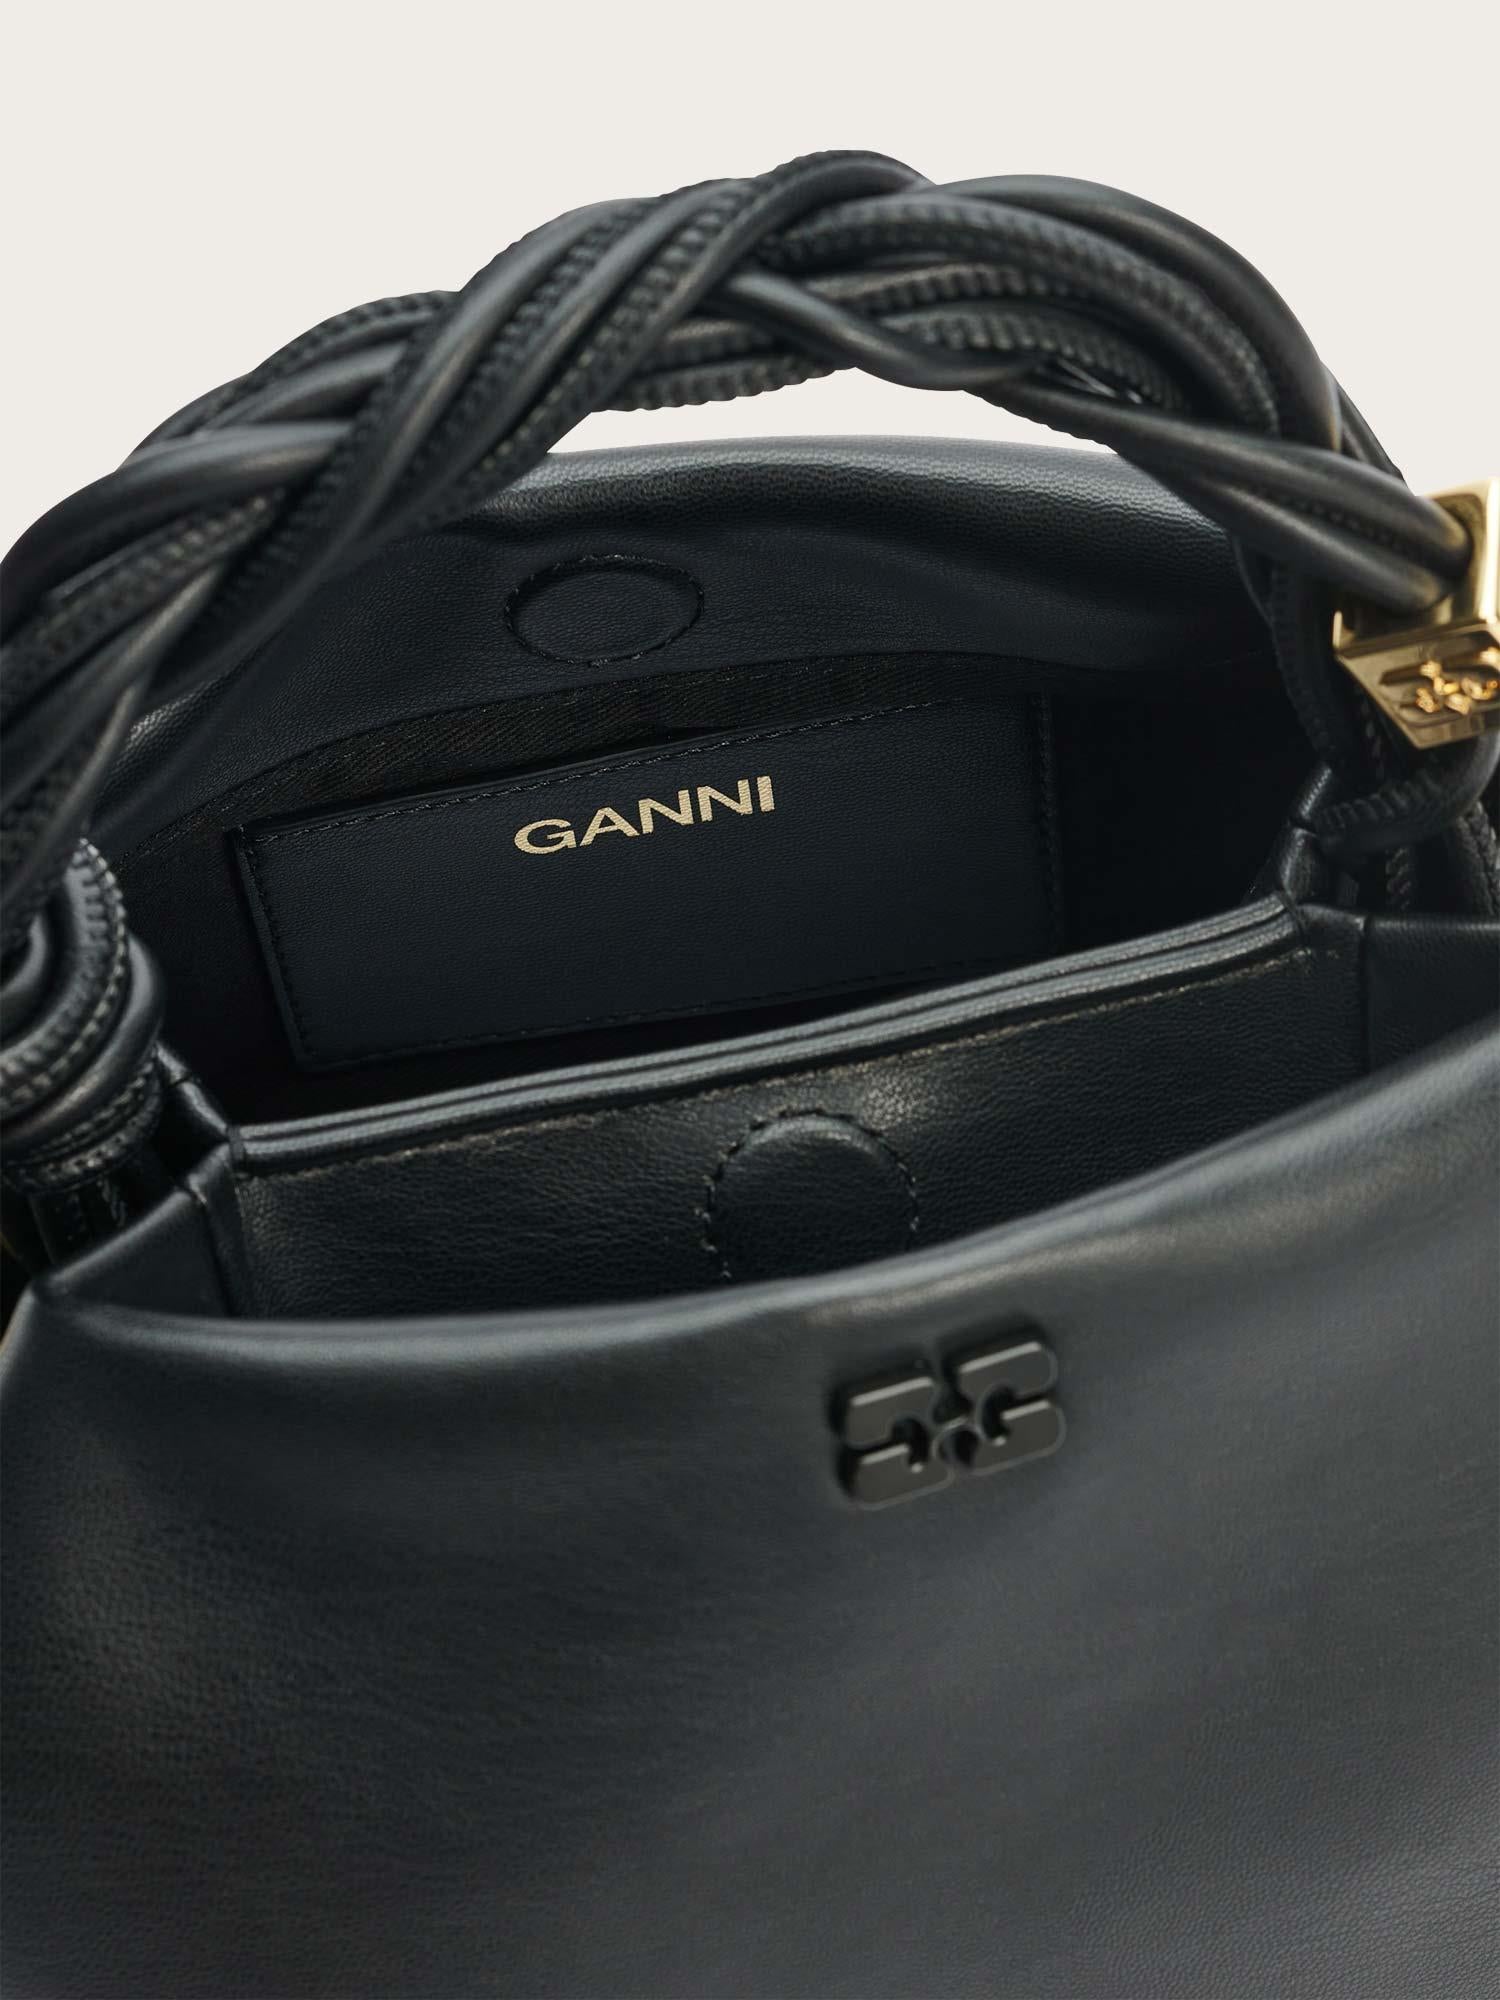 A5241 Ganni Bou Bag Small - Black